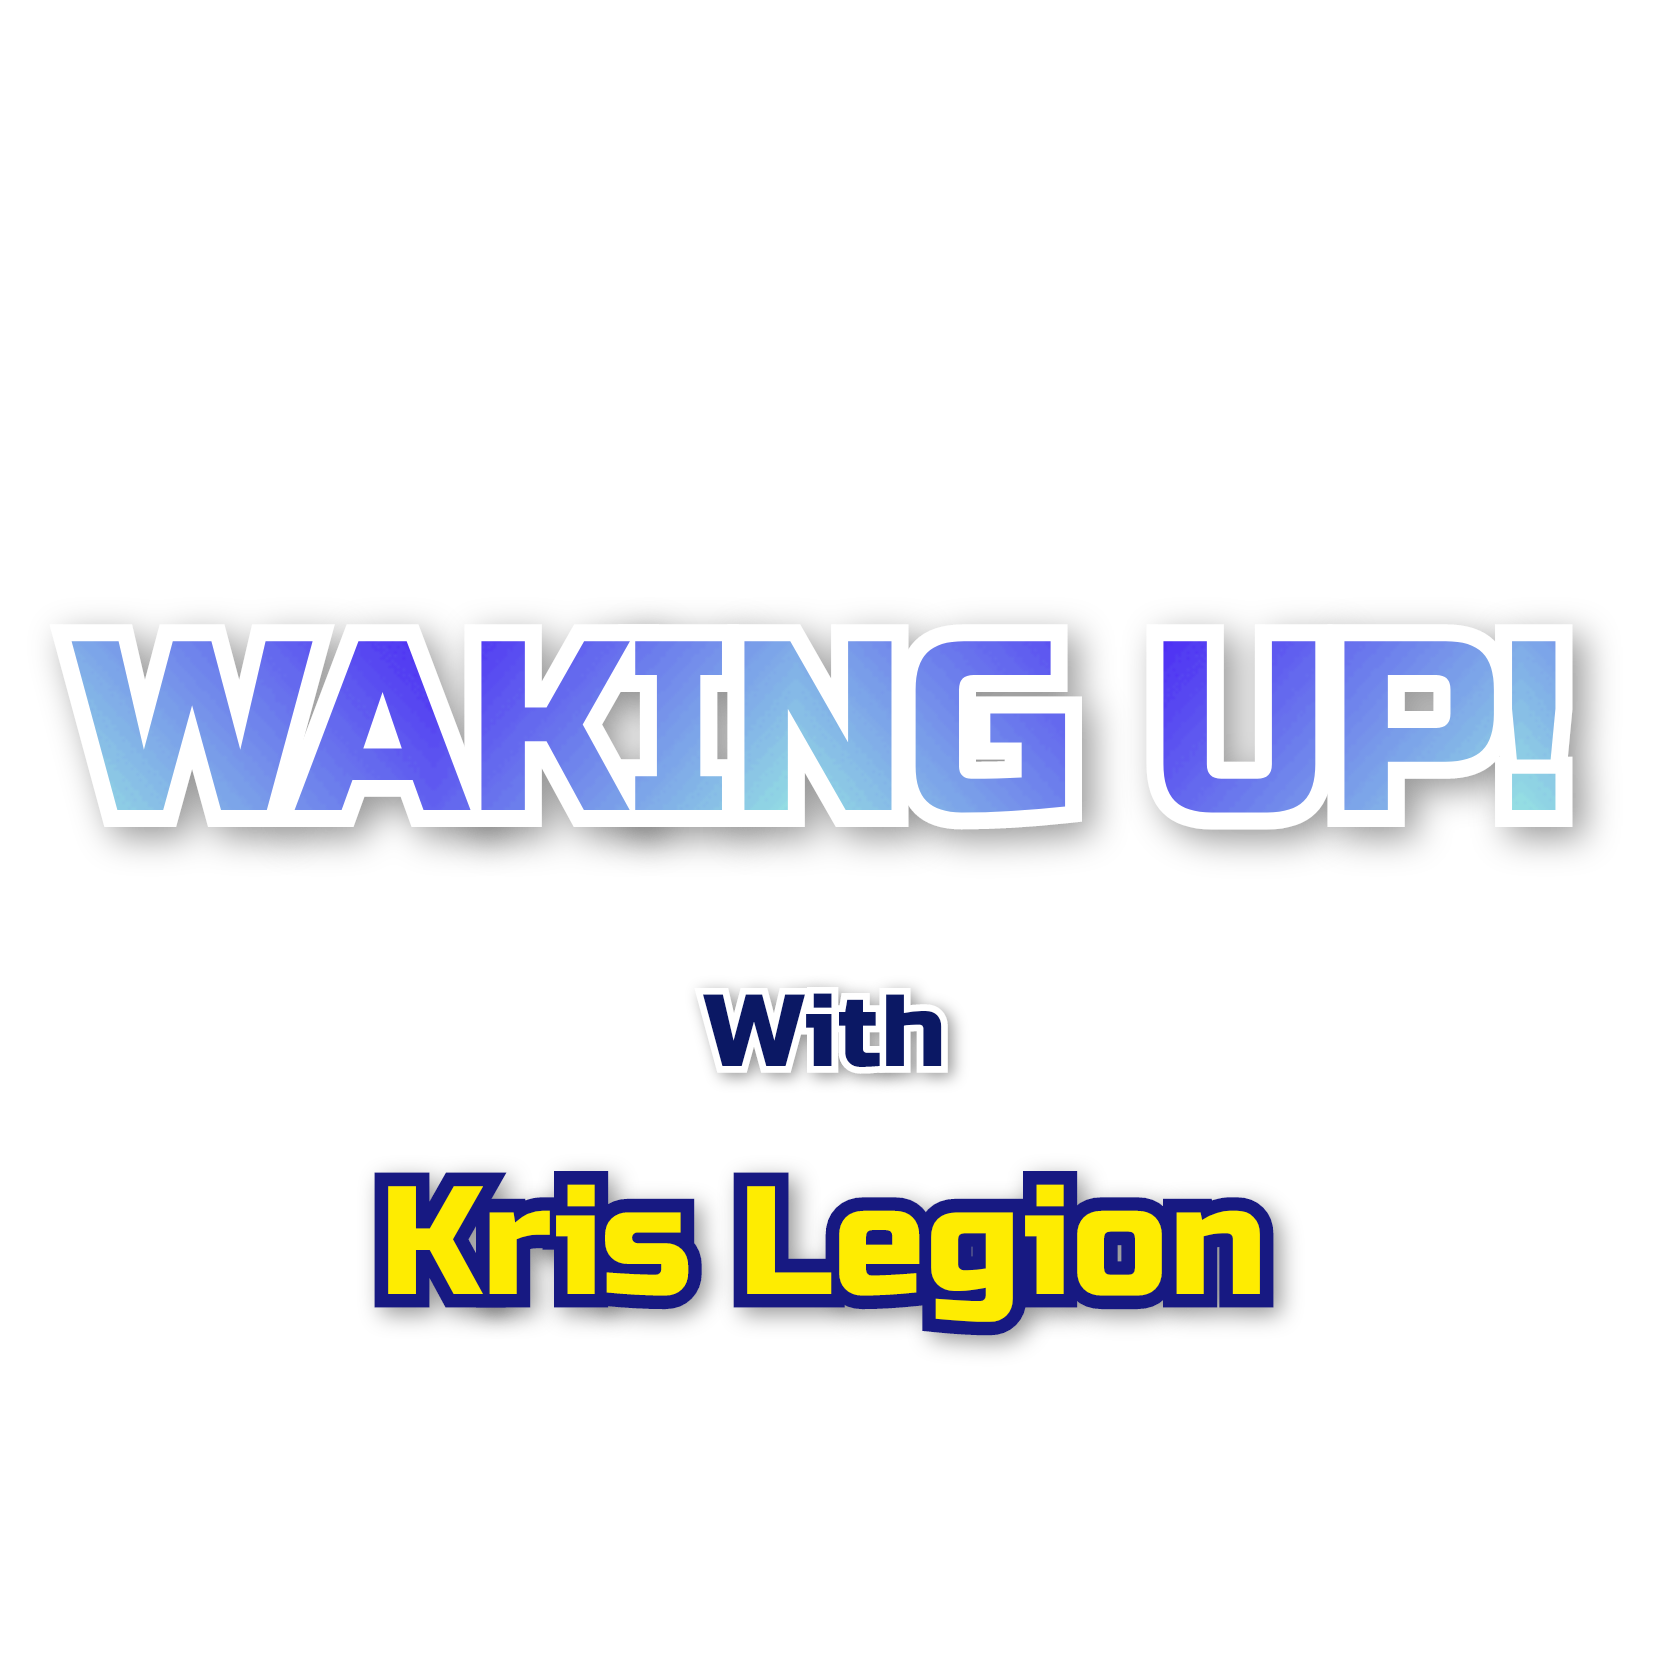 Waking Up! with Kris Legion